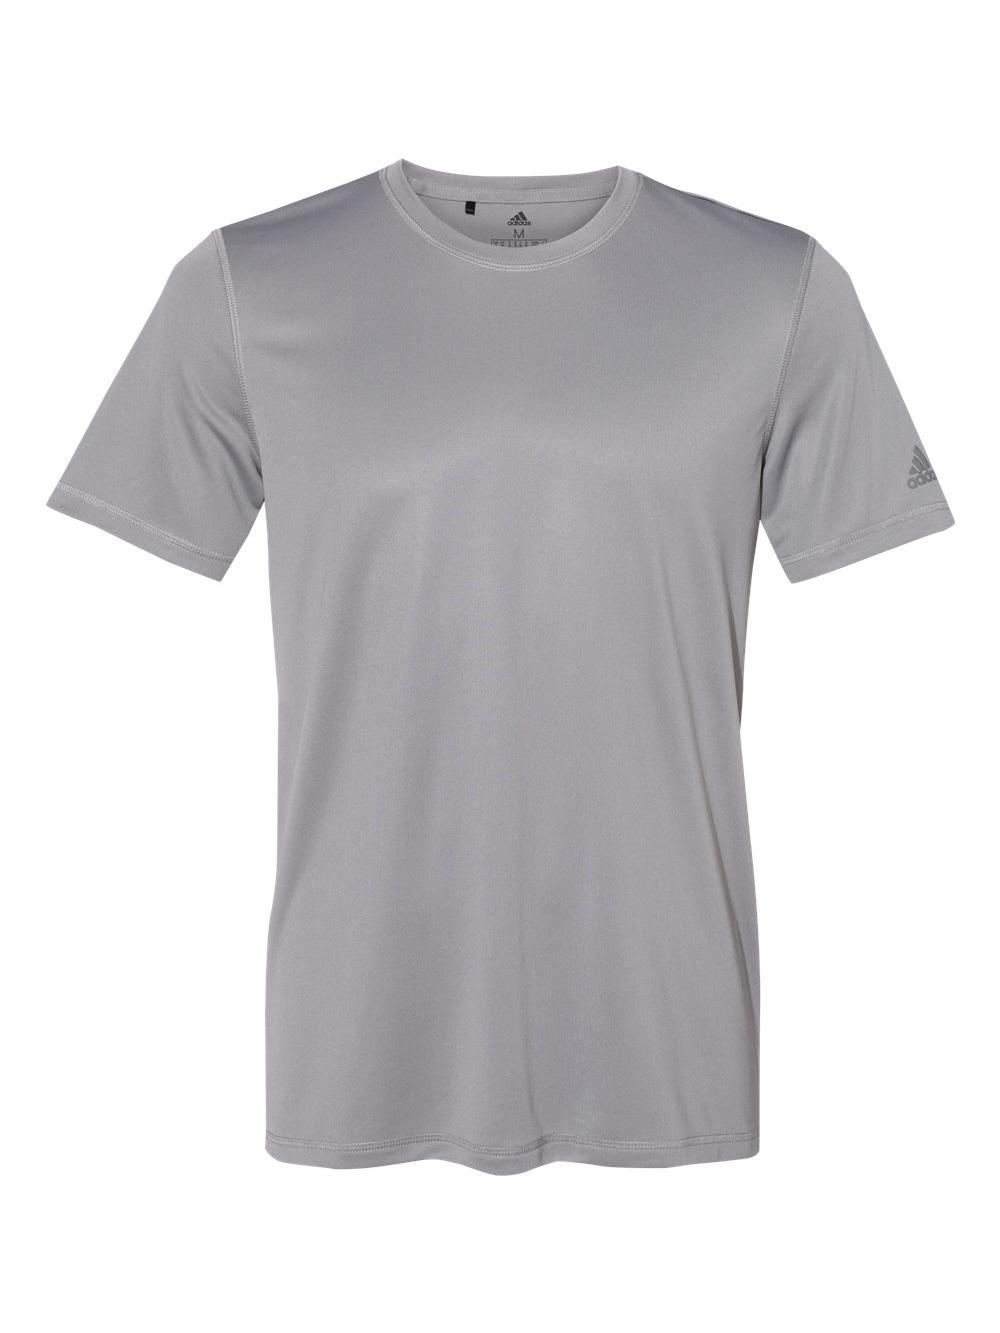 Adidas - Sport T-Shirt - A376 - Grey Three - Size: M - image 2 of 3